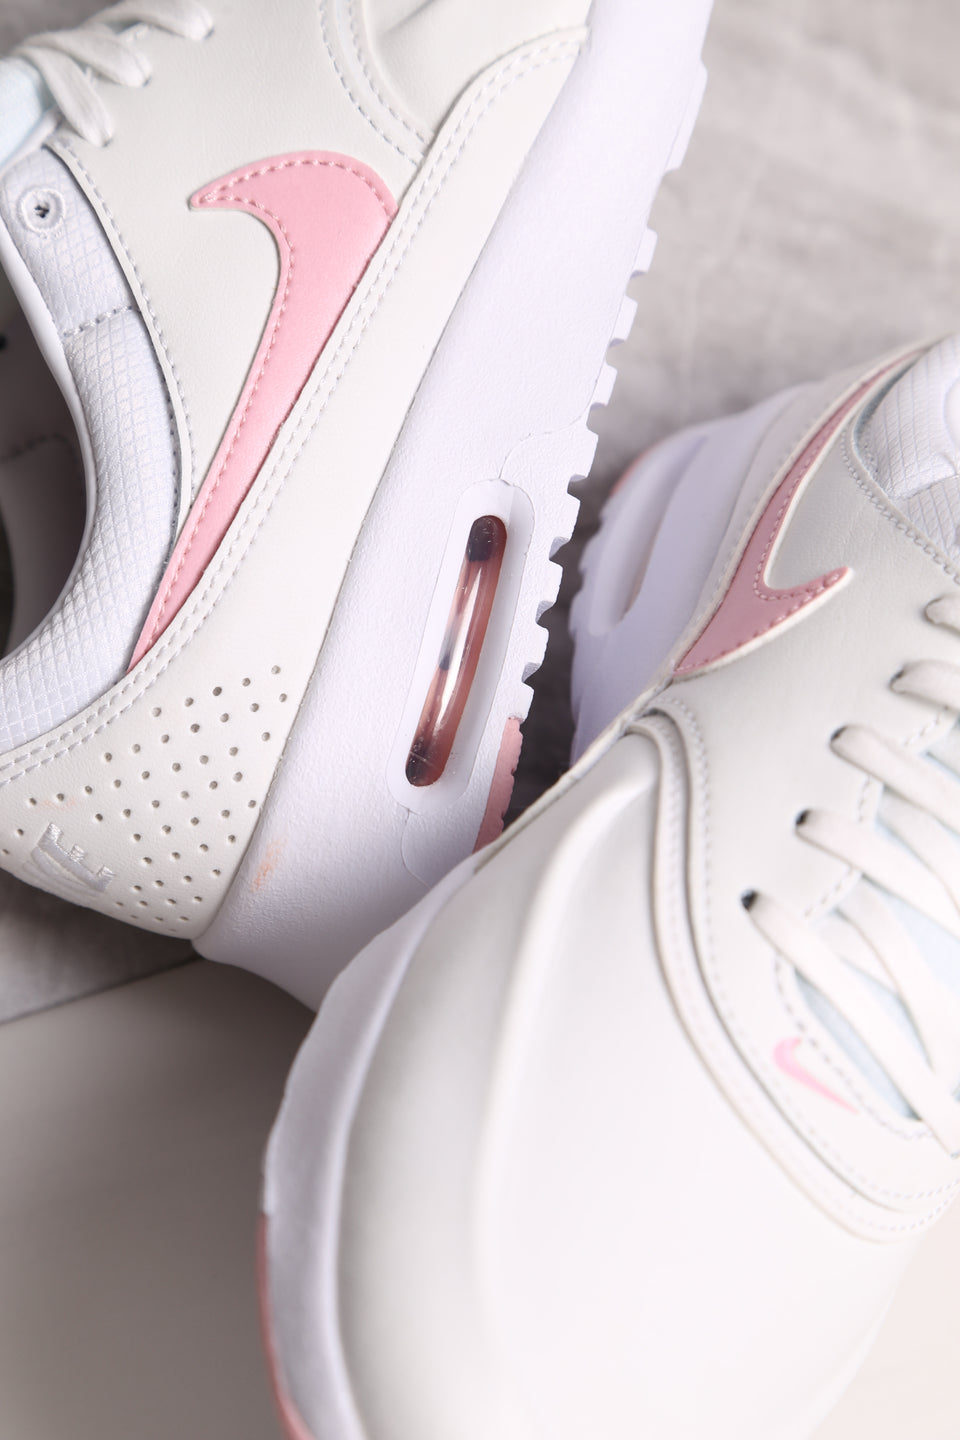 Nike Air Max Thea PRM - White Pearl Pink